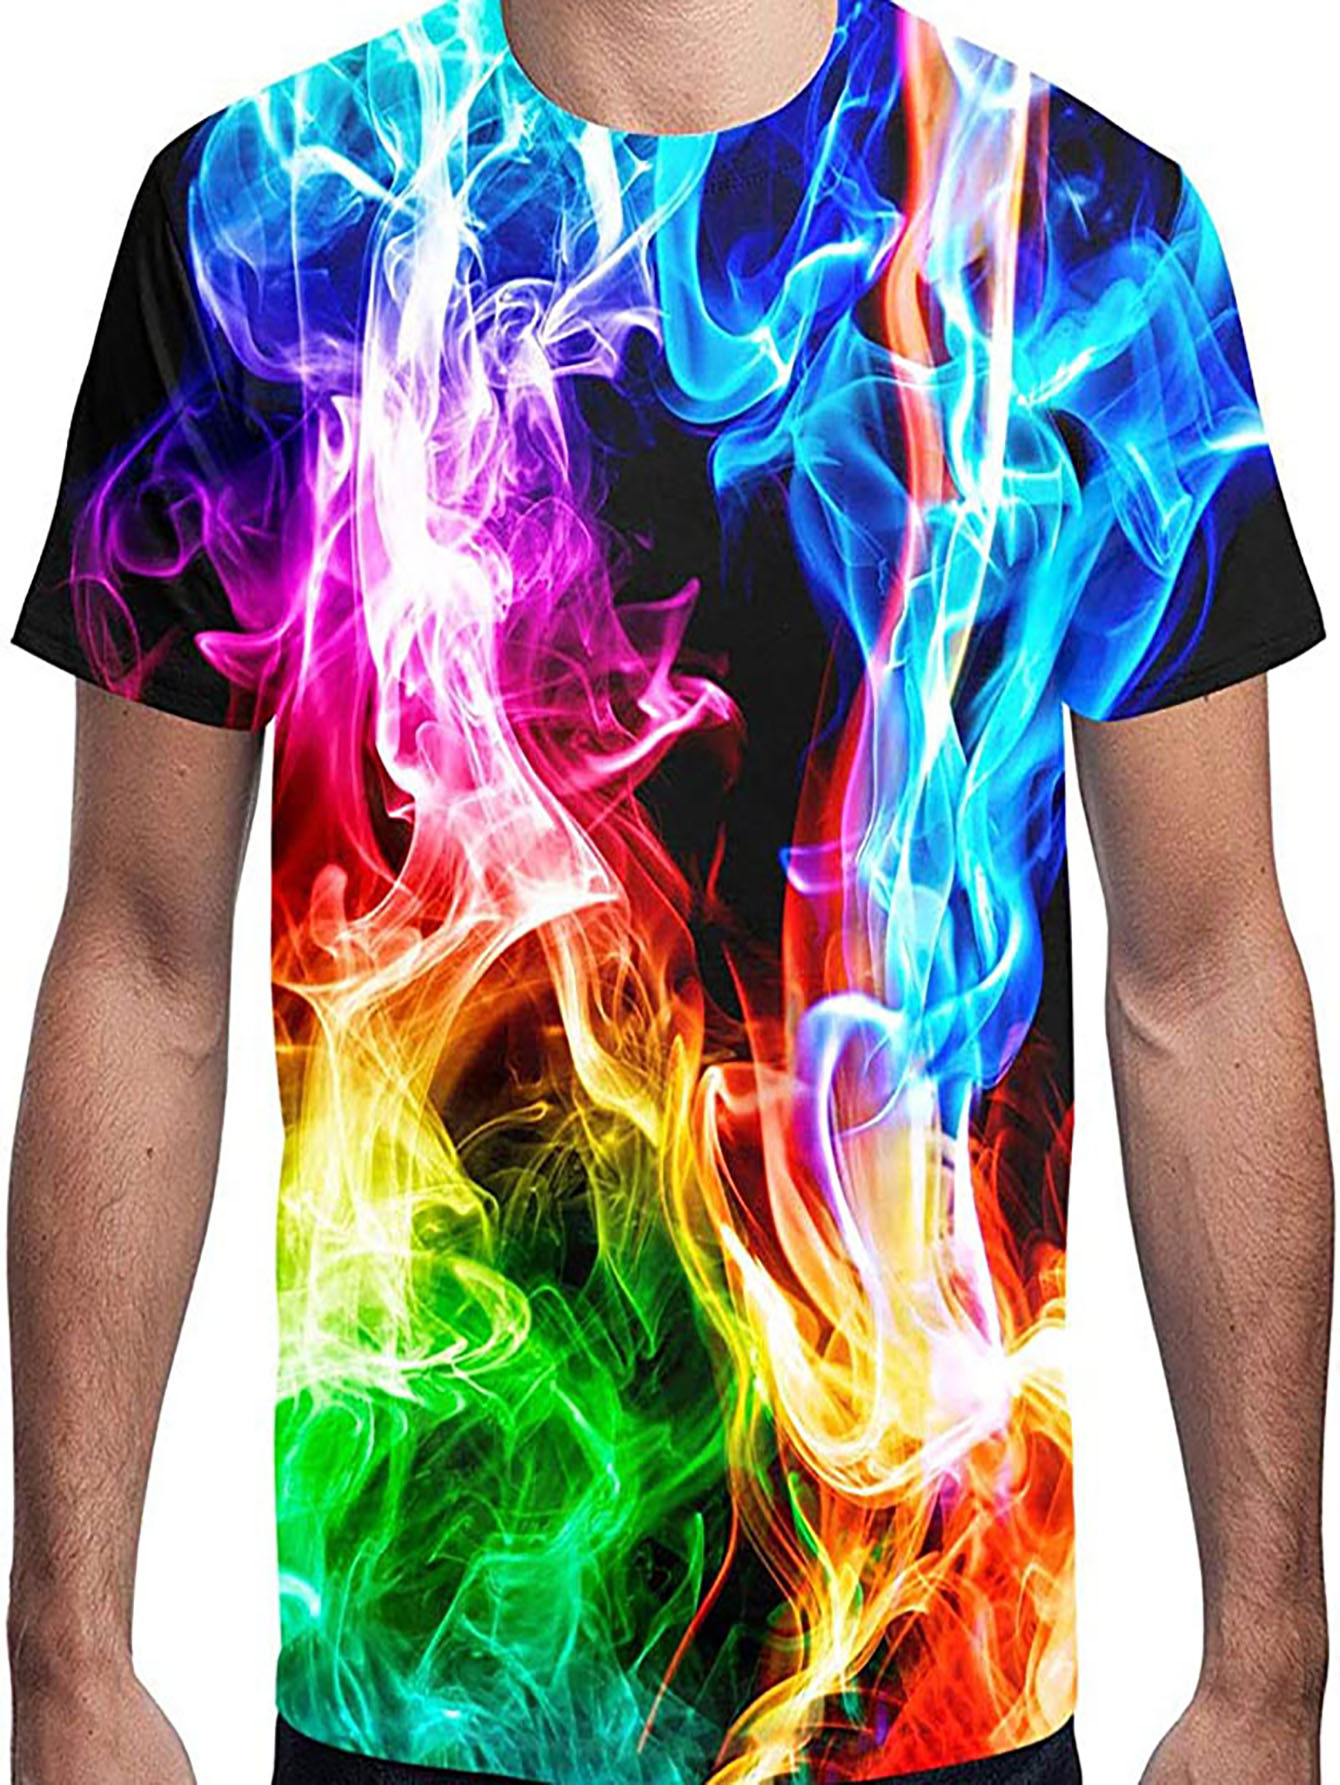 flames - Google Search  Casual shirts for men, Shirts, Sport t shirt